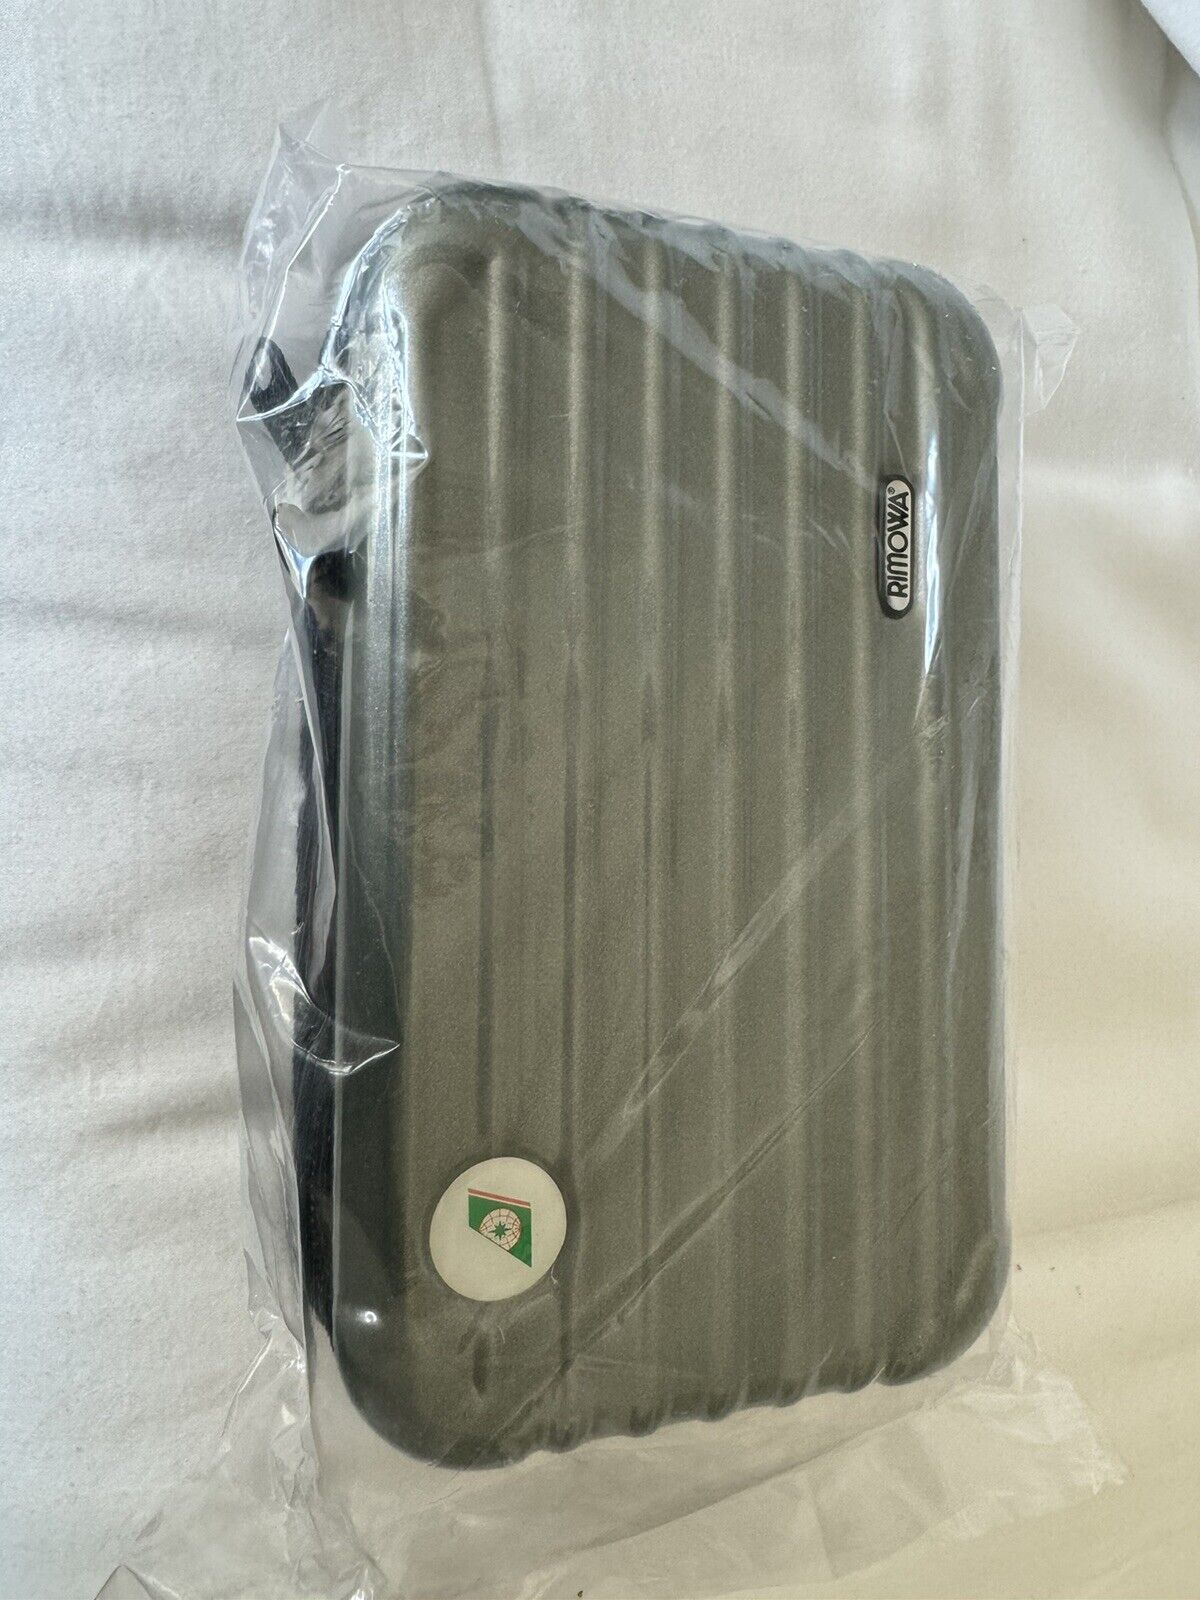 NIB Eva Air Olive Green Rimowa First Class Hard Case Travel Toiletry Amenity Kit